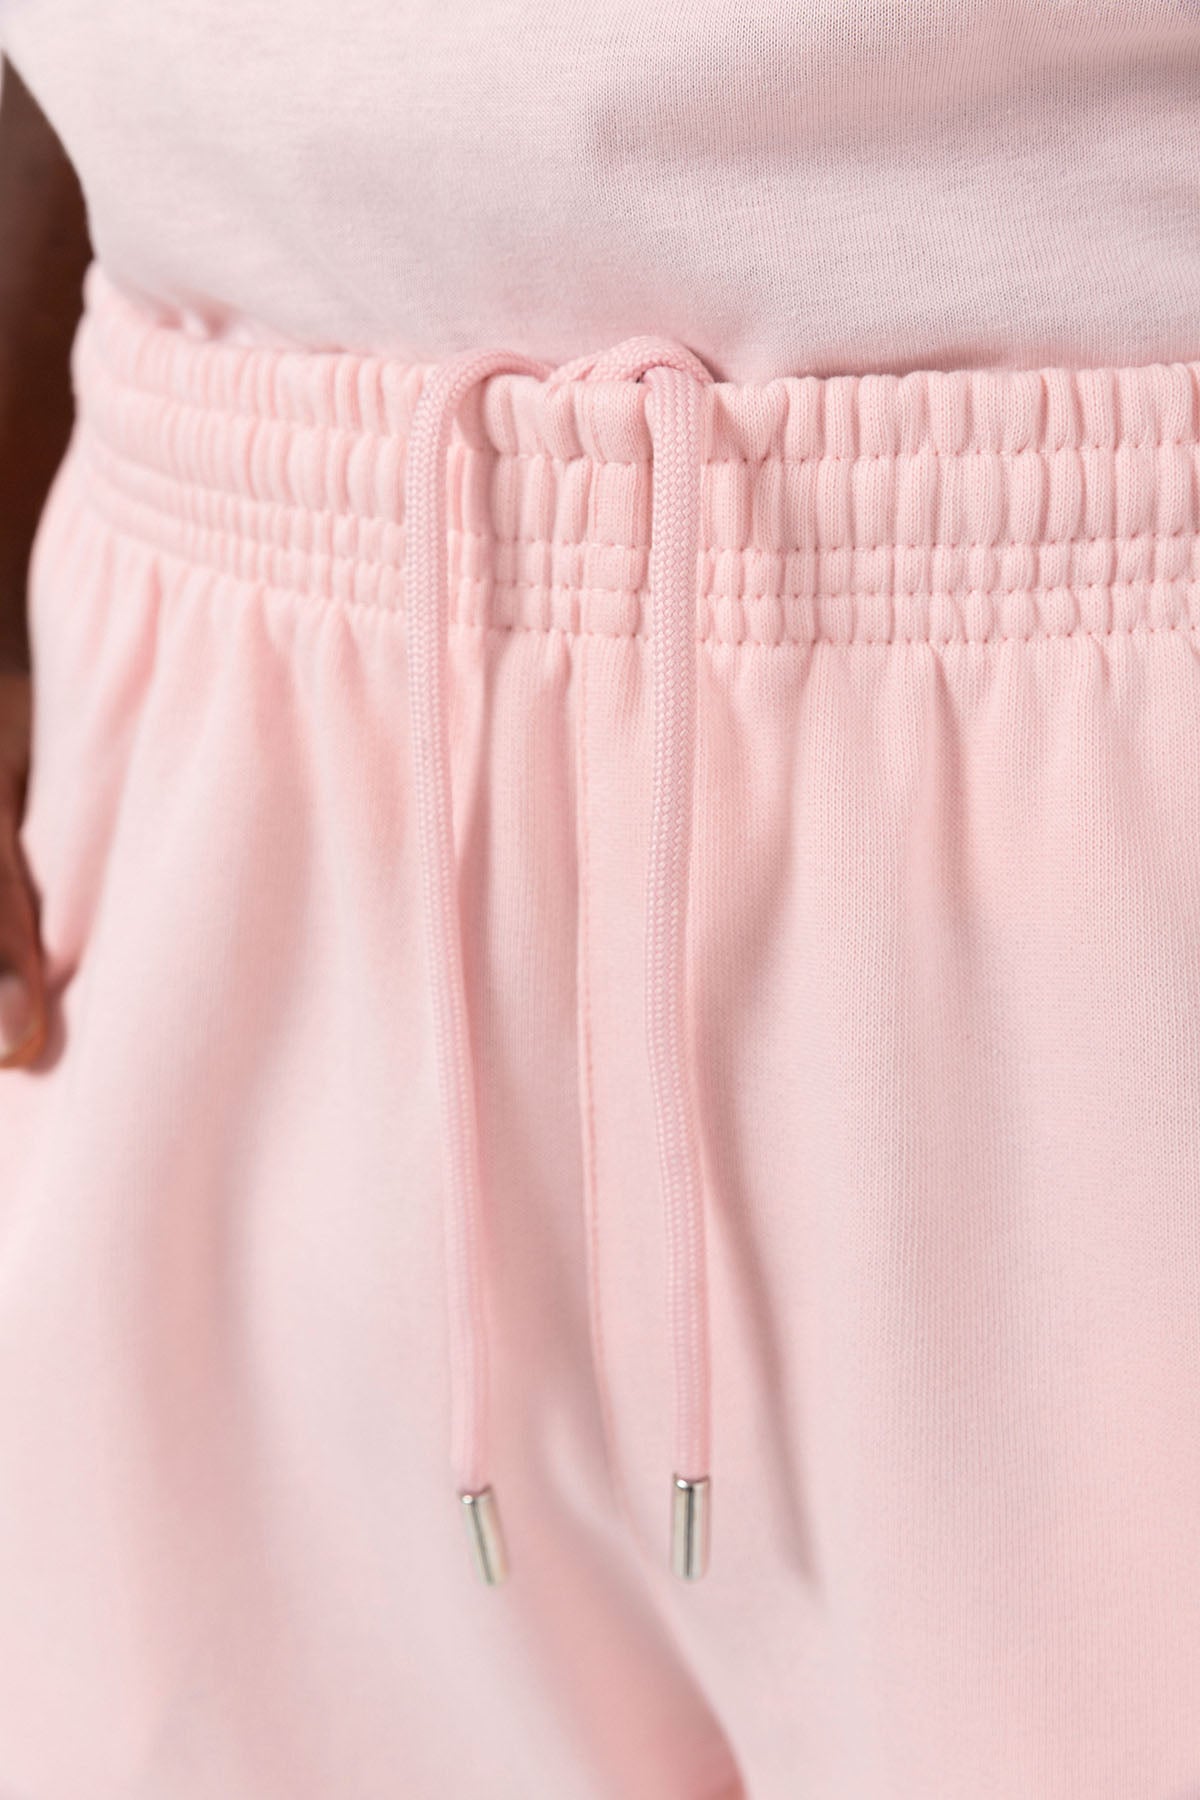 Unisex Shorts in Blush Pink